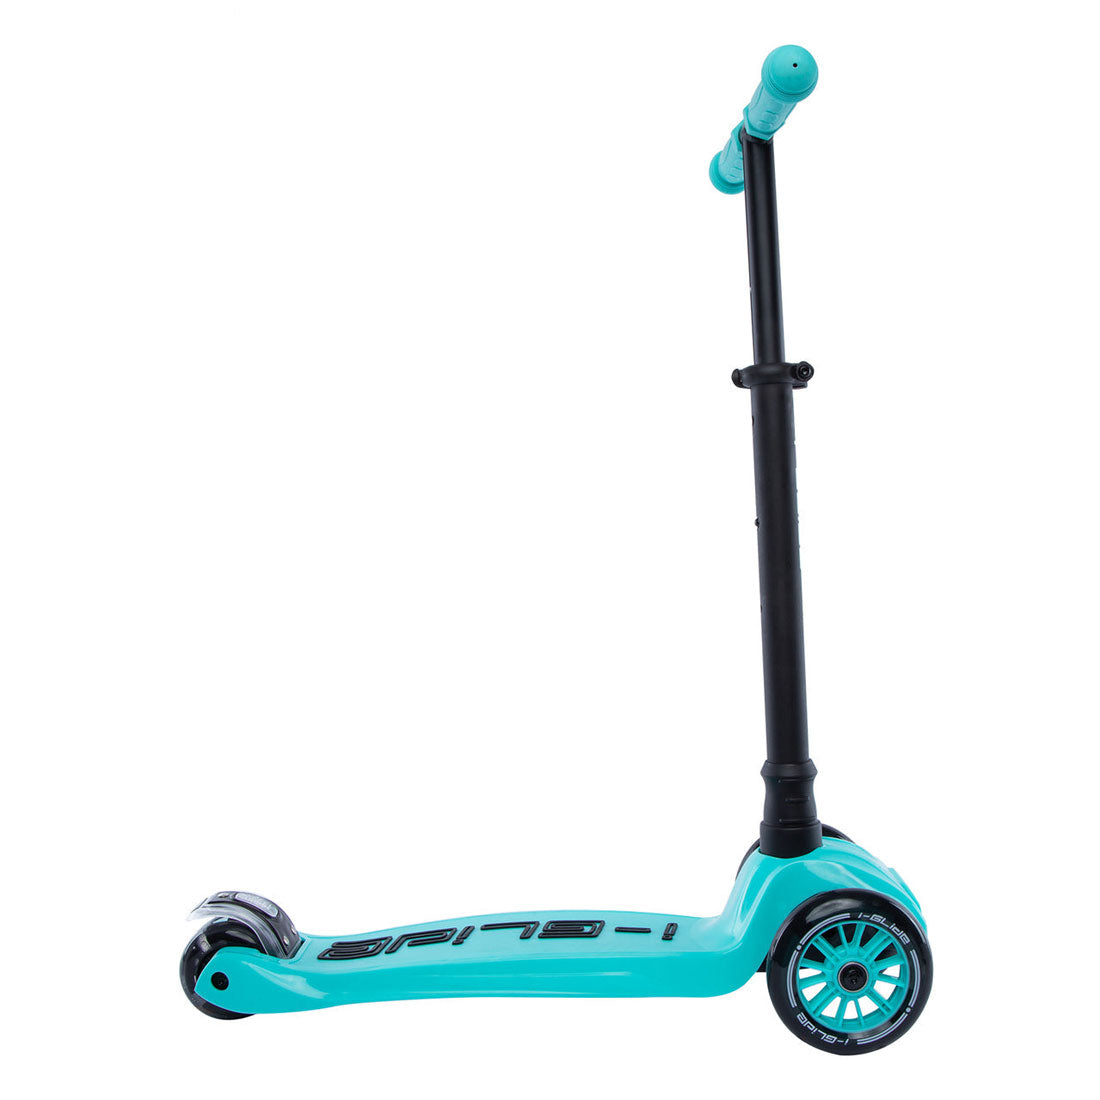 I-Glide Kids 3-Wheel Scooter - Aqua/Black Scooter Completes Rec